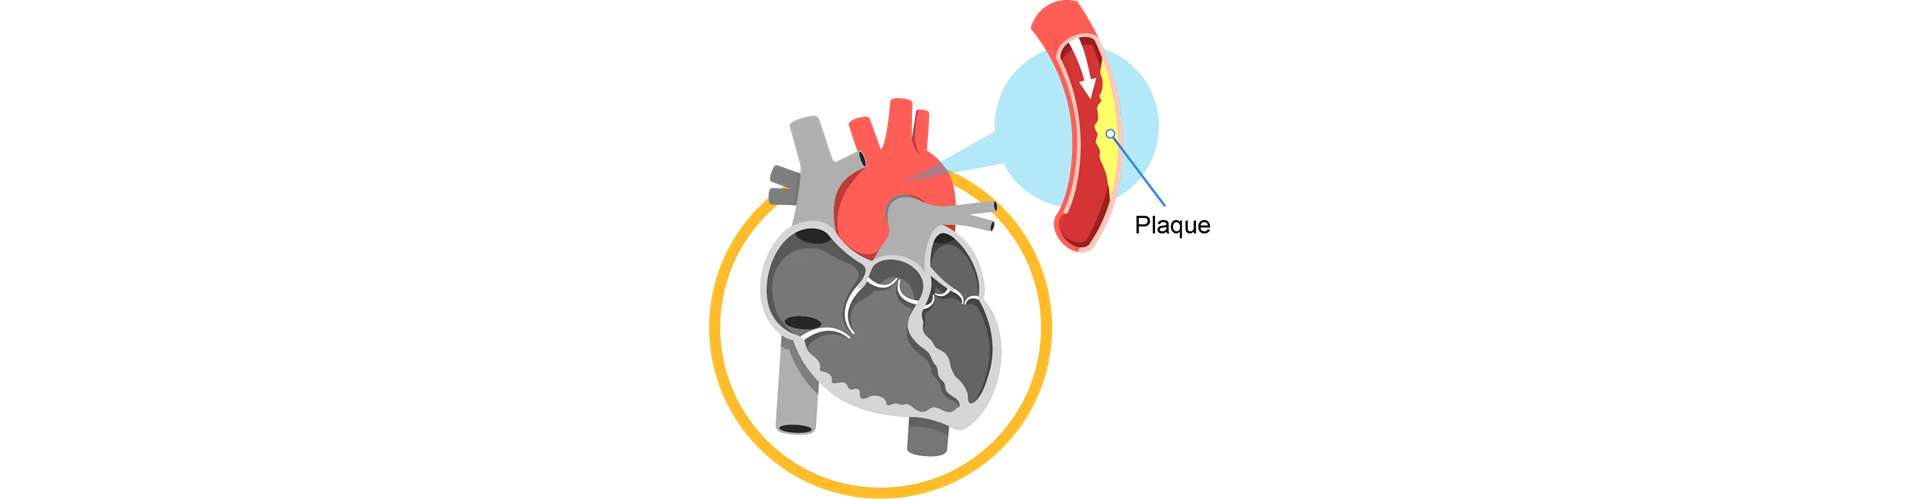 plaque build-up in coronary arteries